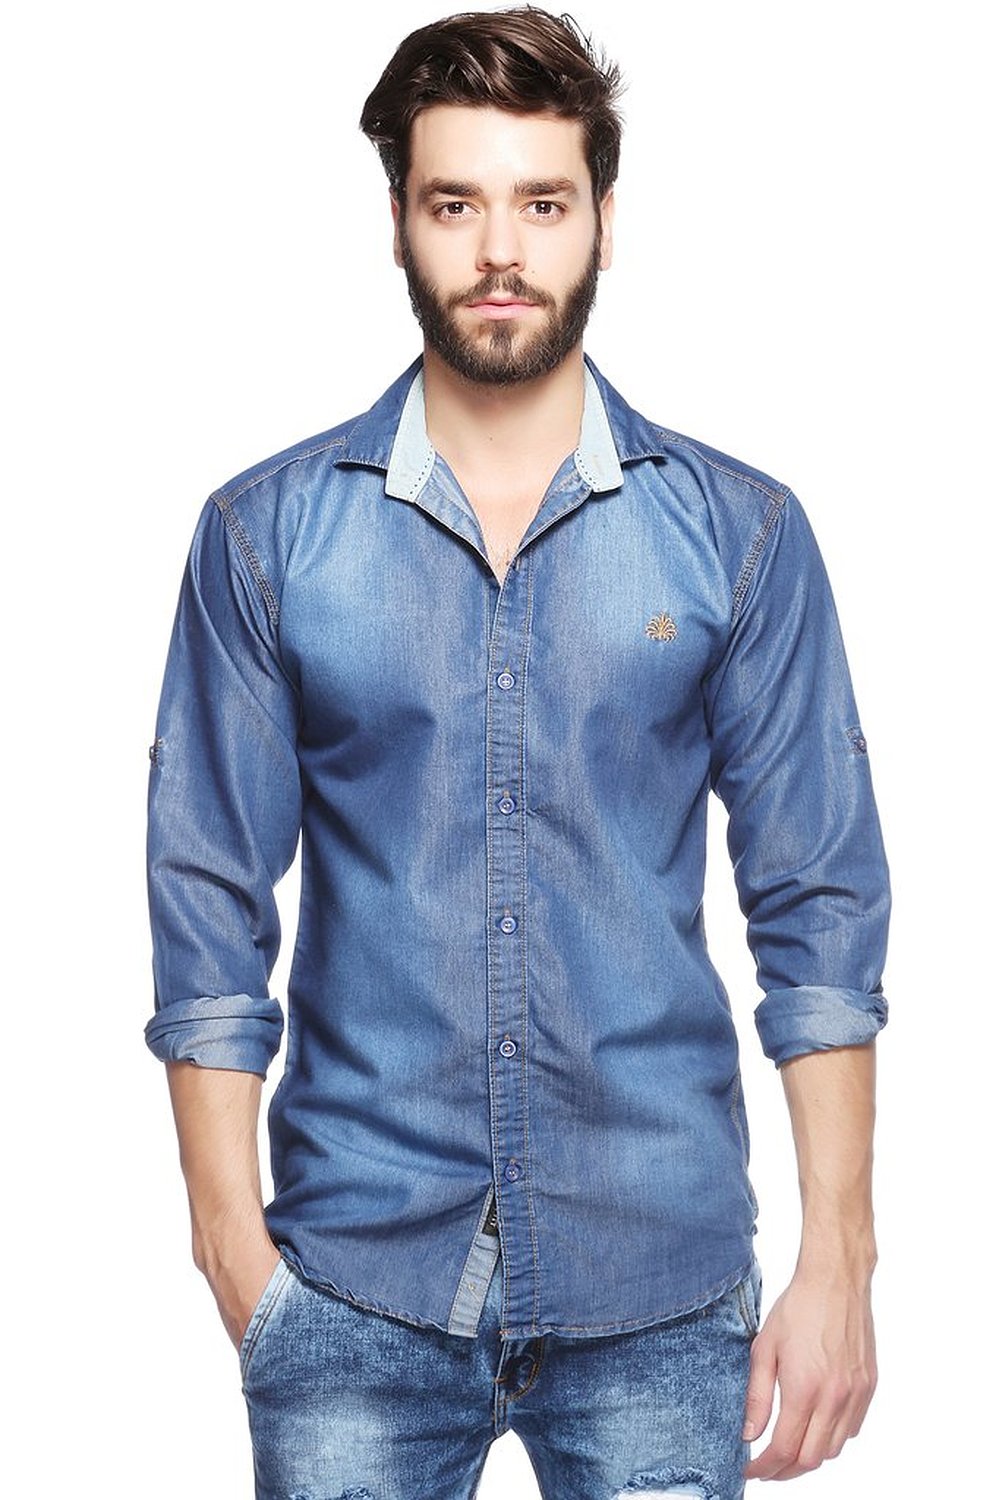 Men's Slim Fit Denim Shirt - Be Fashionable Be Stylish